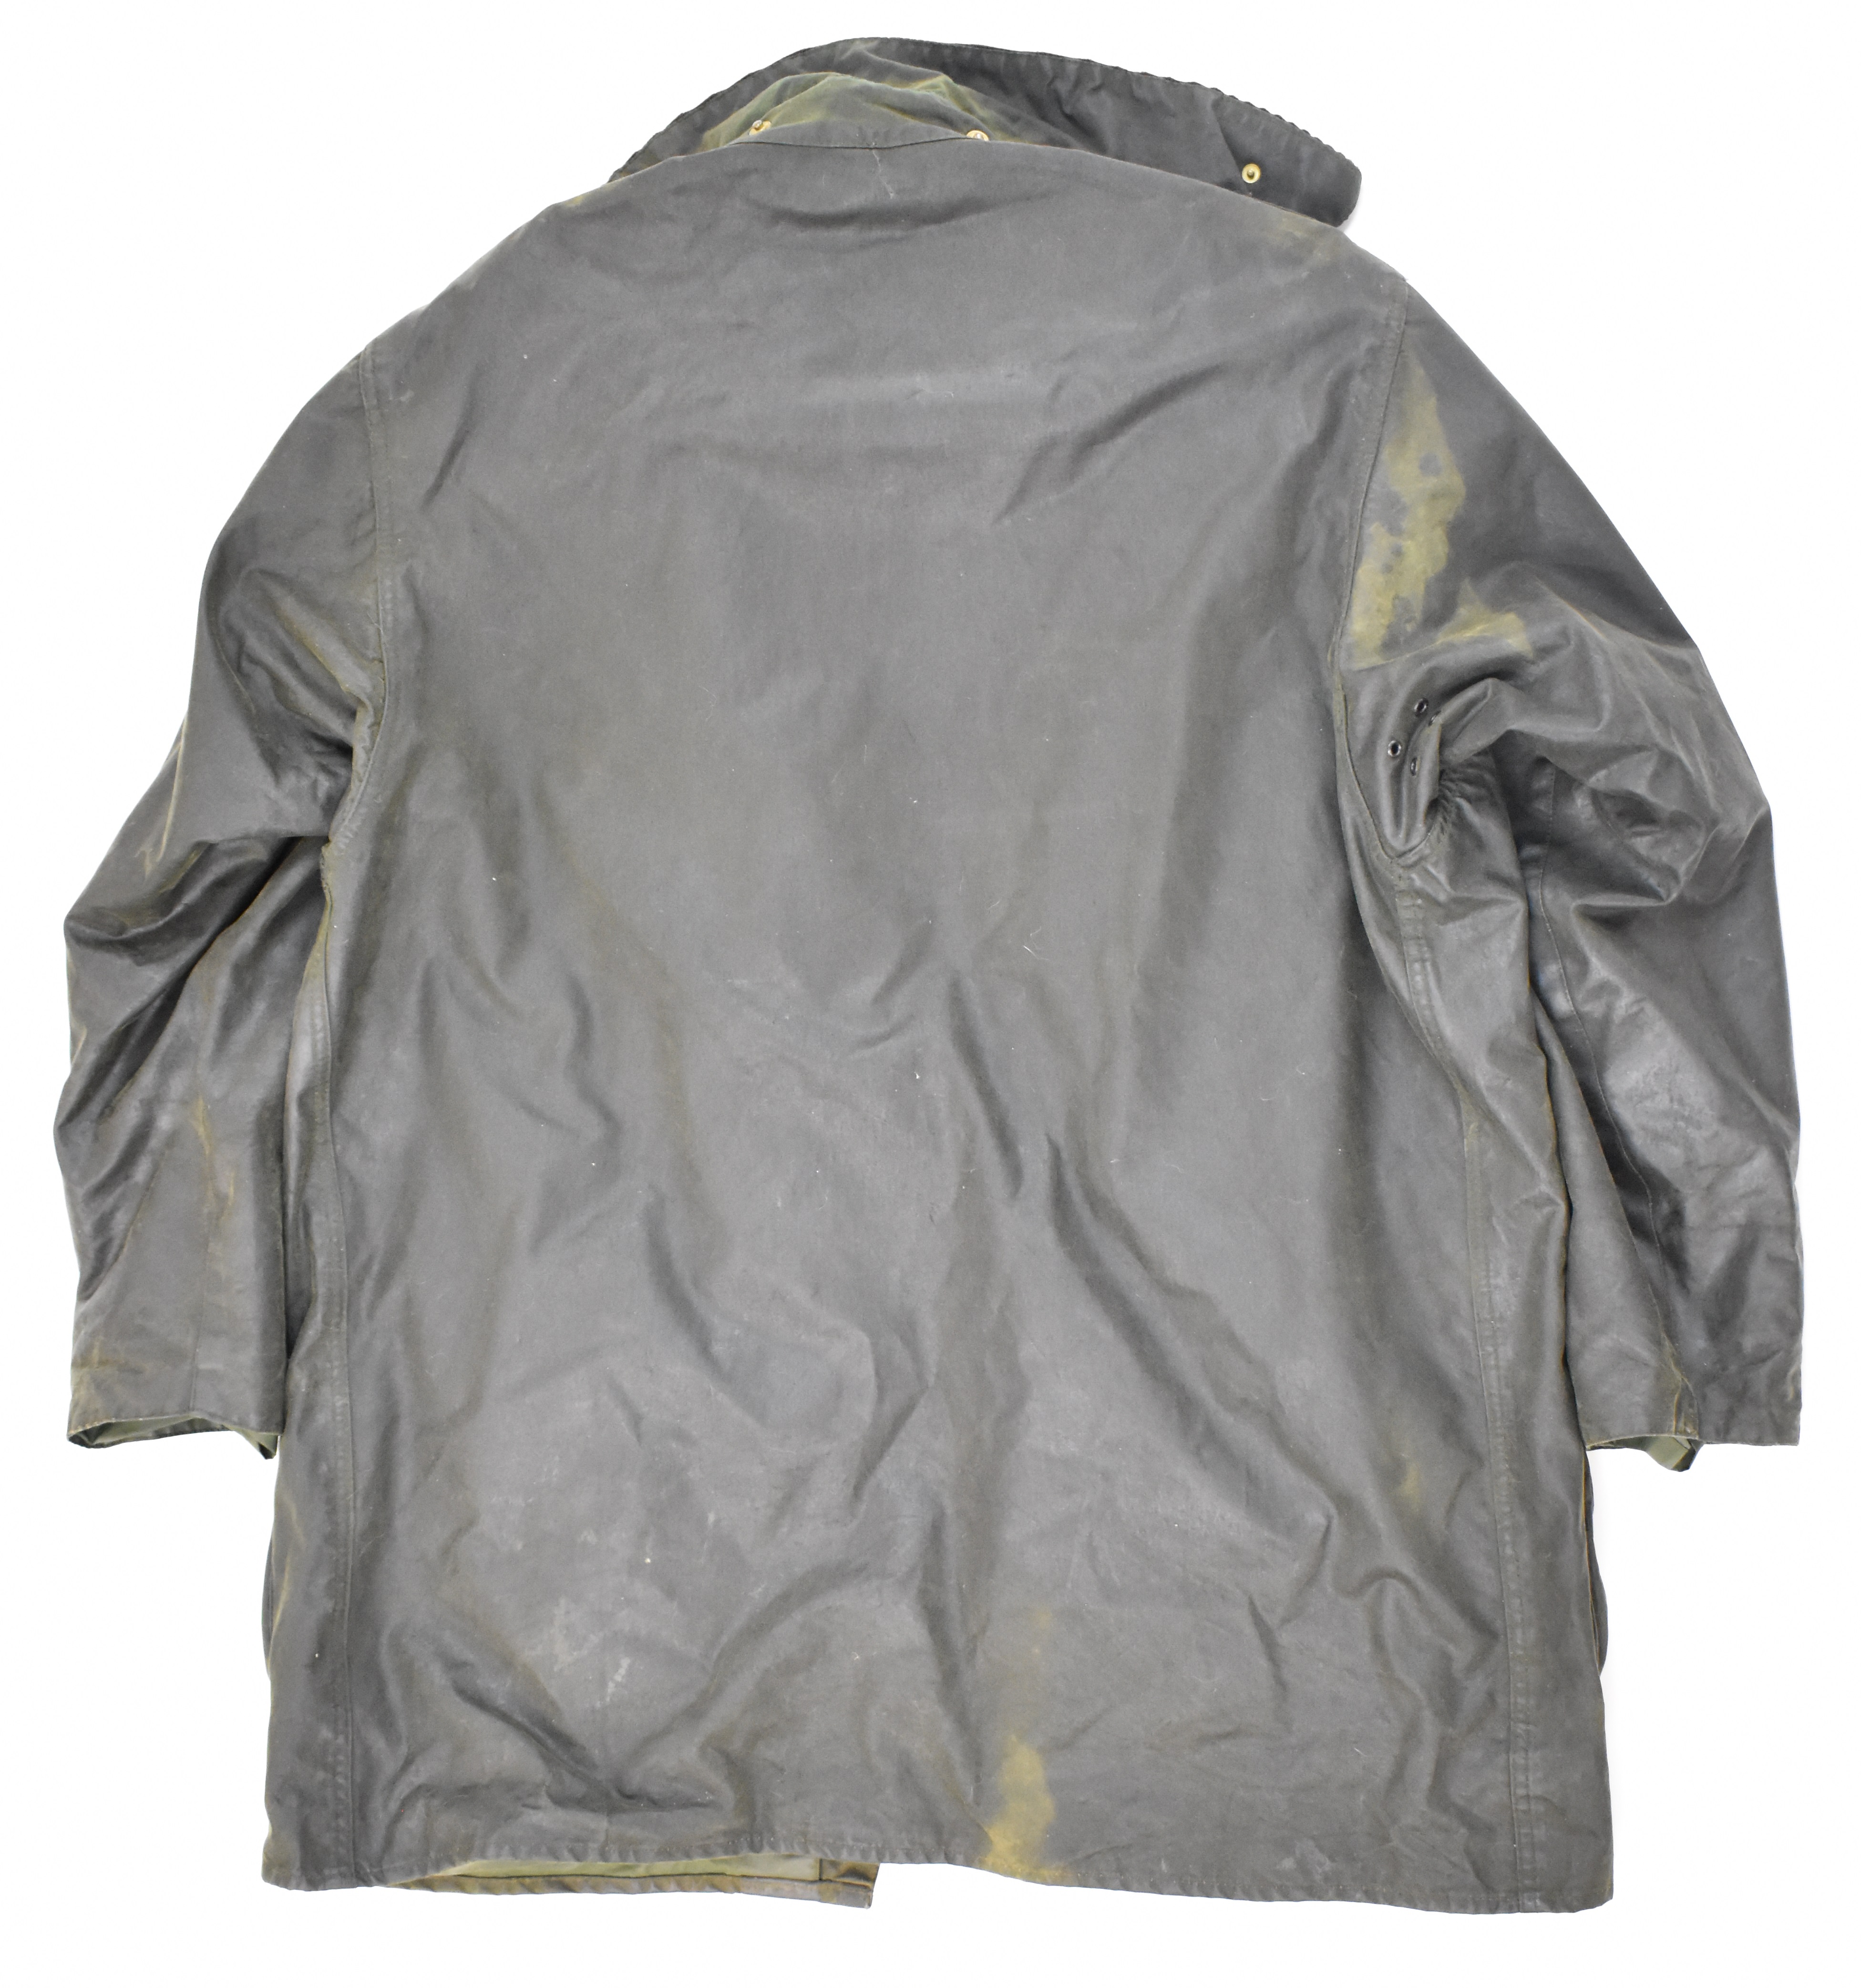 Barbour Northumbria gentleman's waxed jacket, size 44 - Image 3 of 4